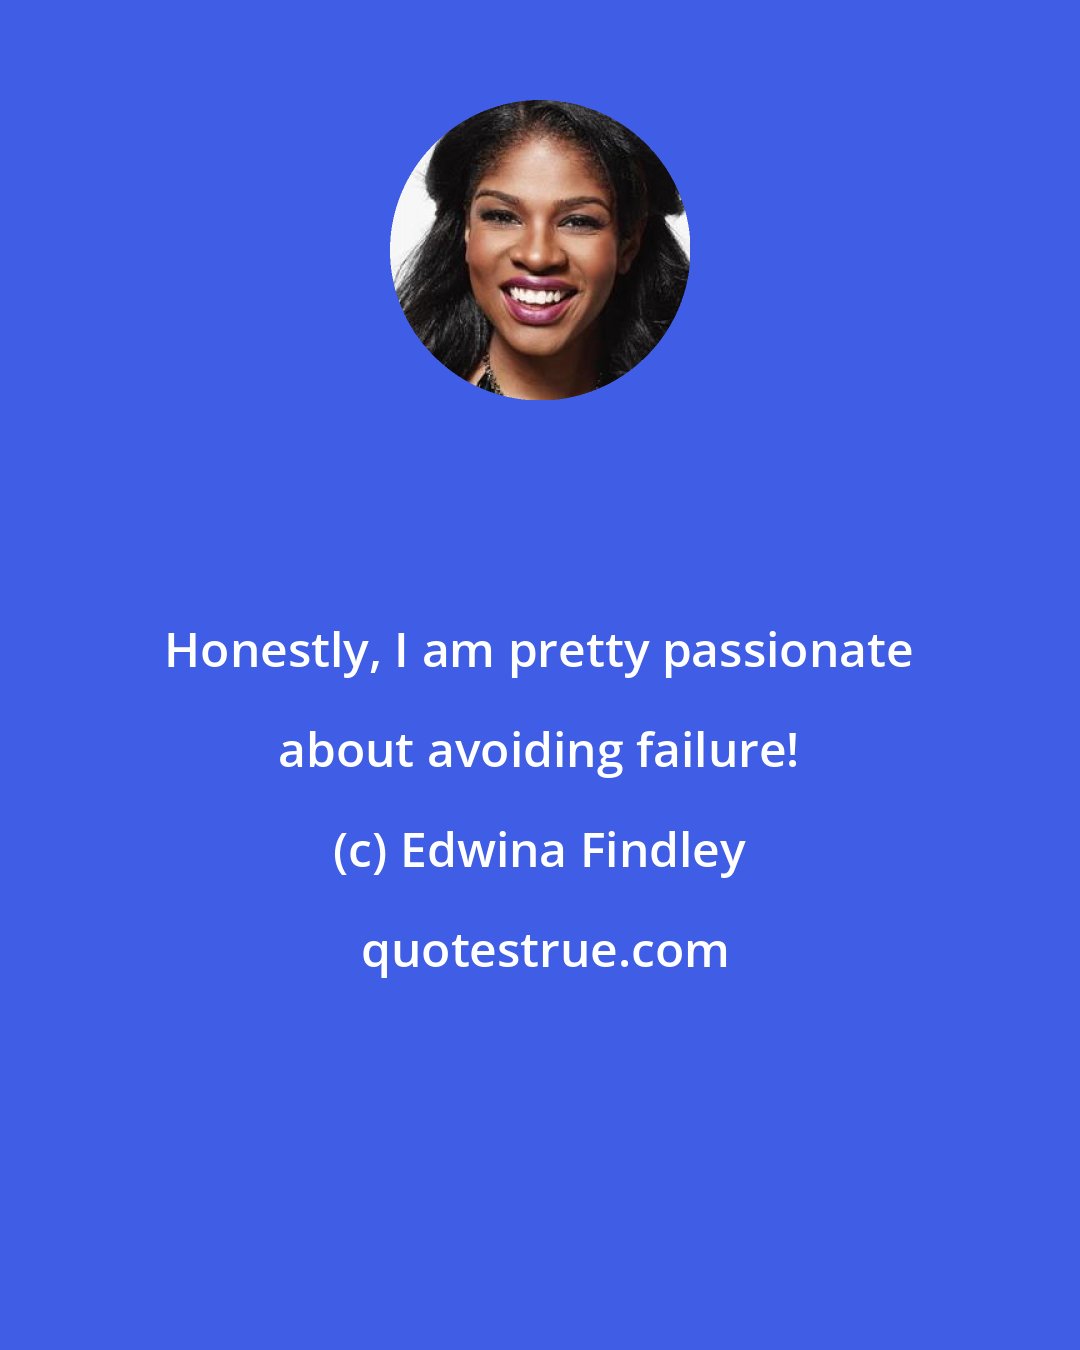 Edwina Findley: Honestly, I am pretty passionate about avoiding failure!